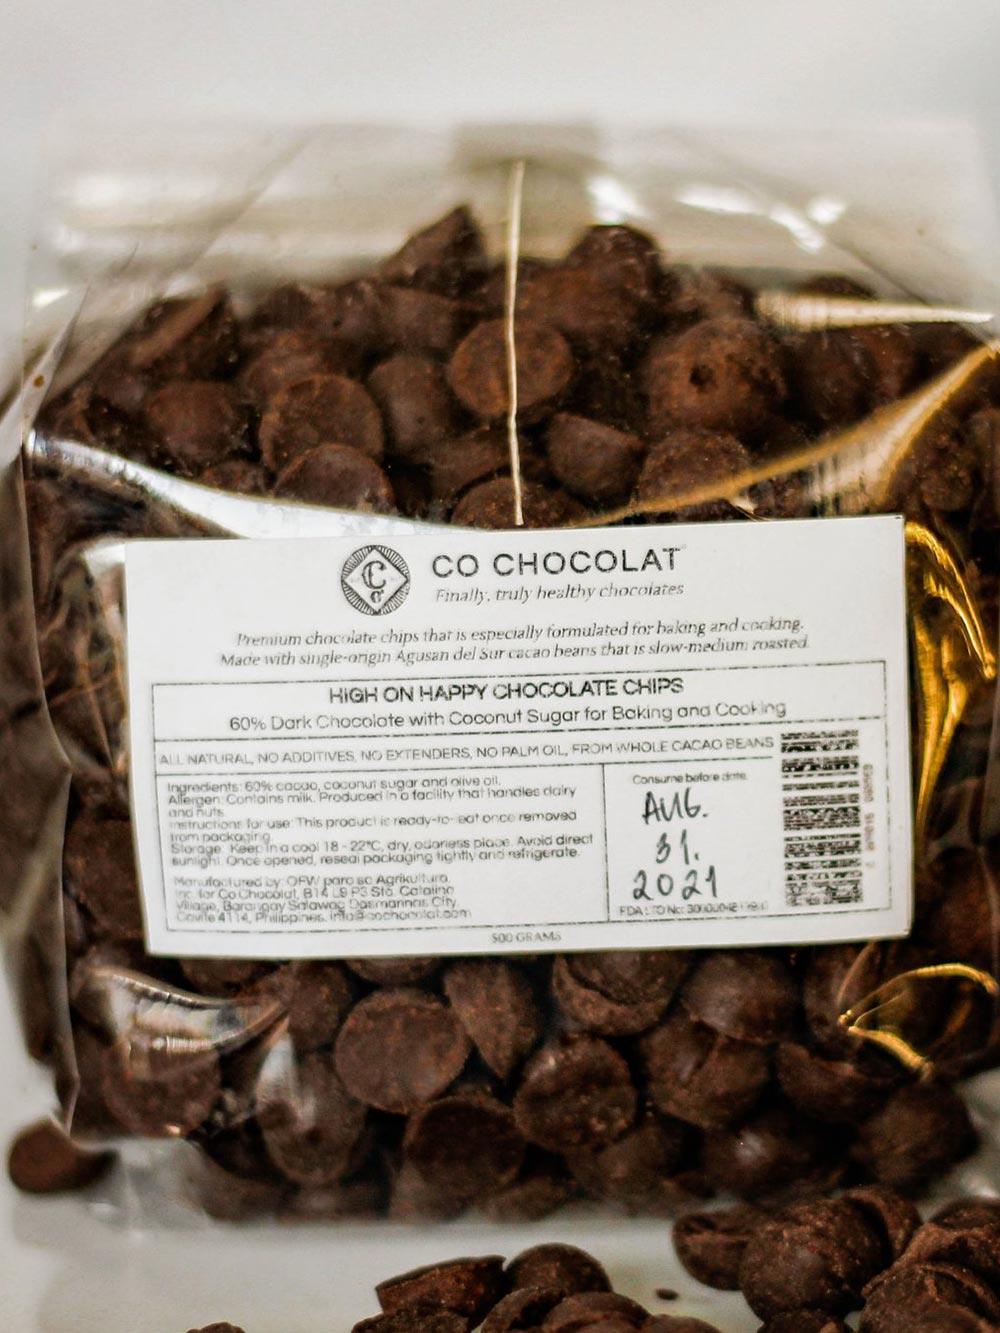 Chocolate Chips: High on Happy (60% Dark Chocolate) - Gluten Free, Vegan, Refined Sugar-Free, Nut-Free - Co Chocolat - Finally, Truly Healthy Chocolates